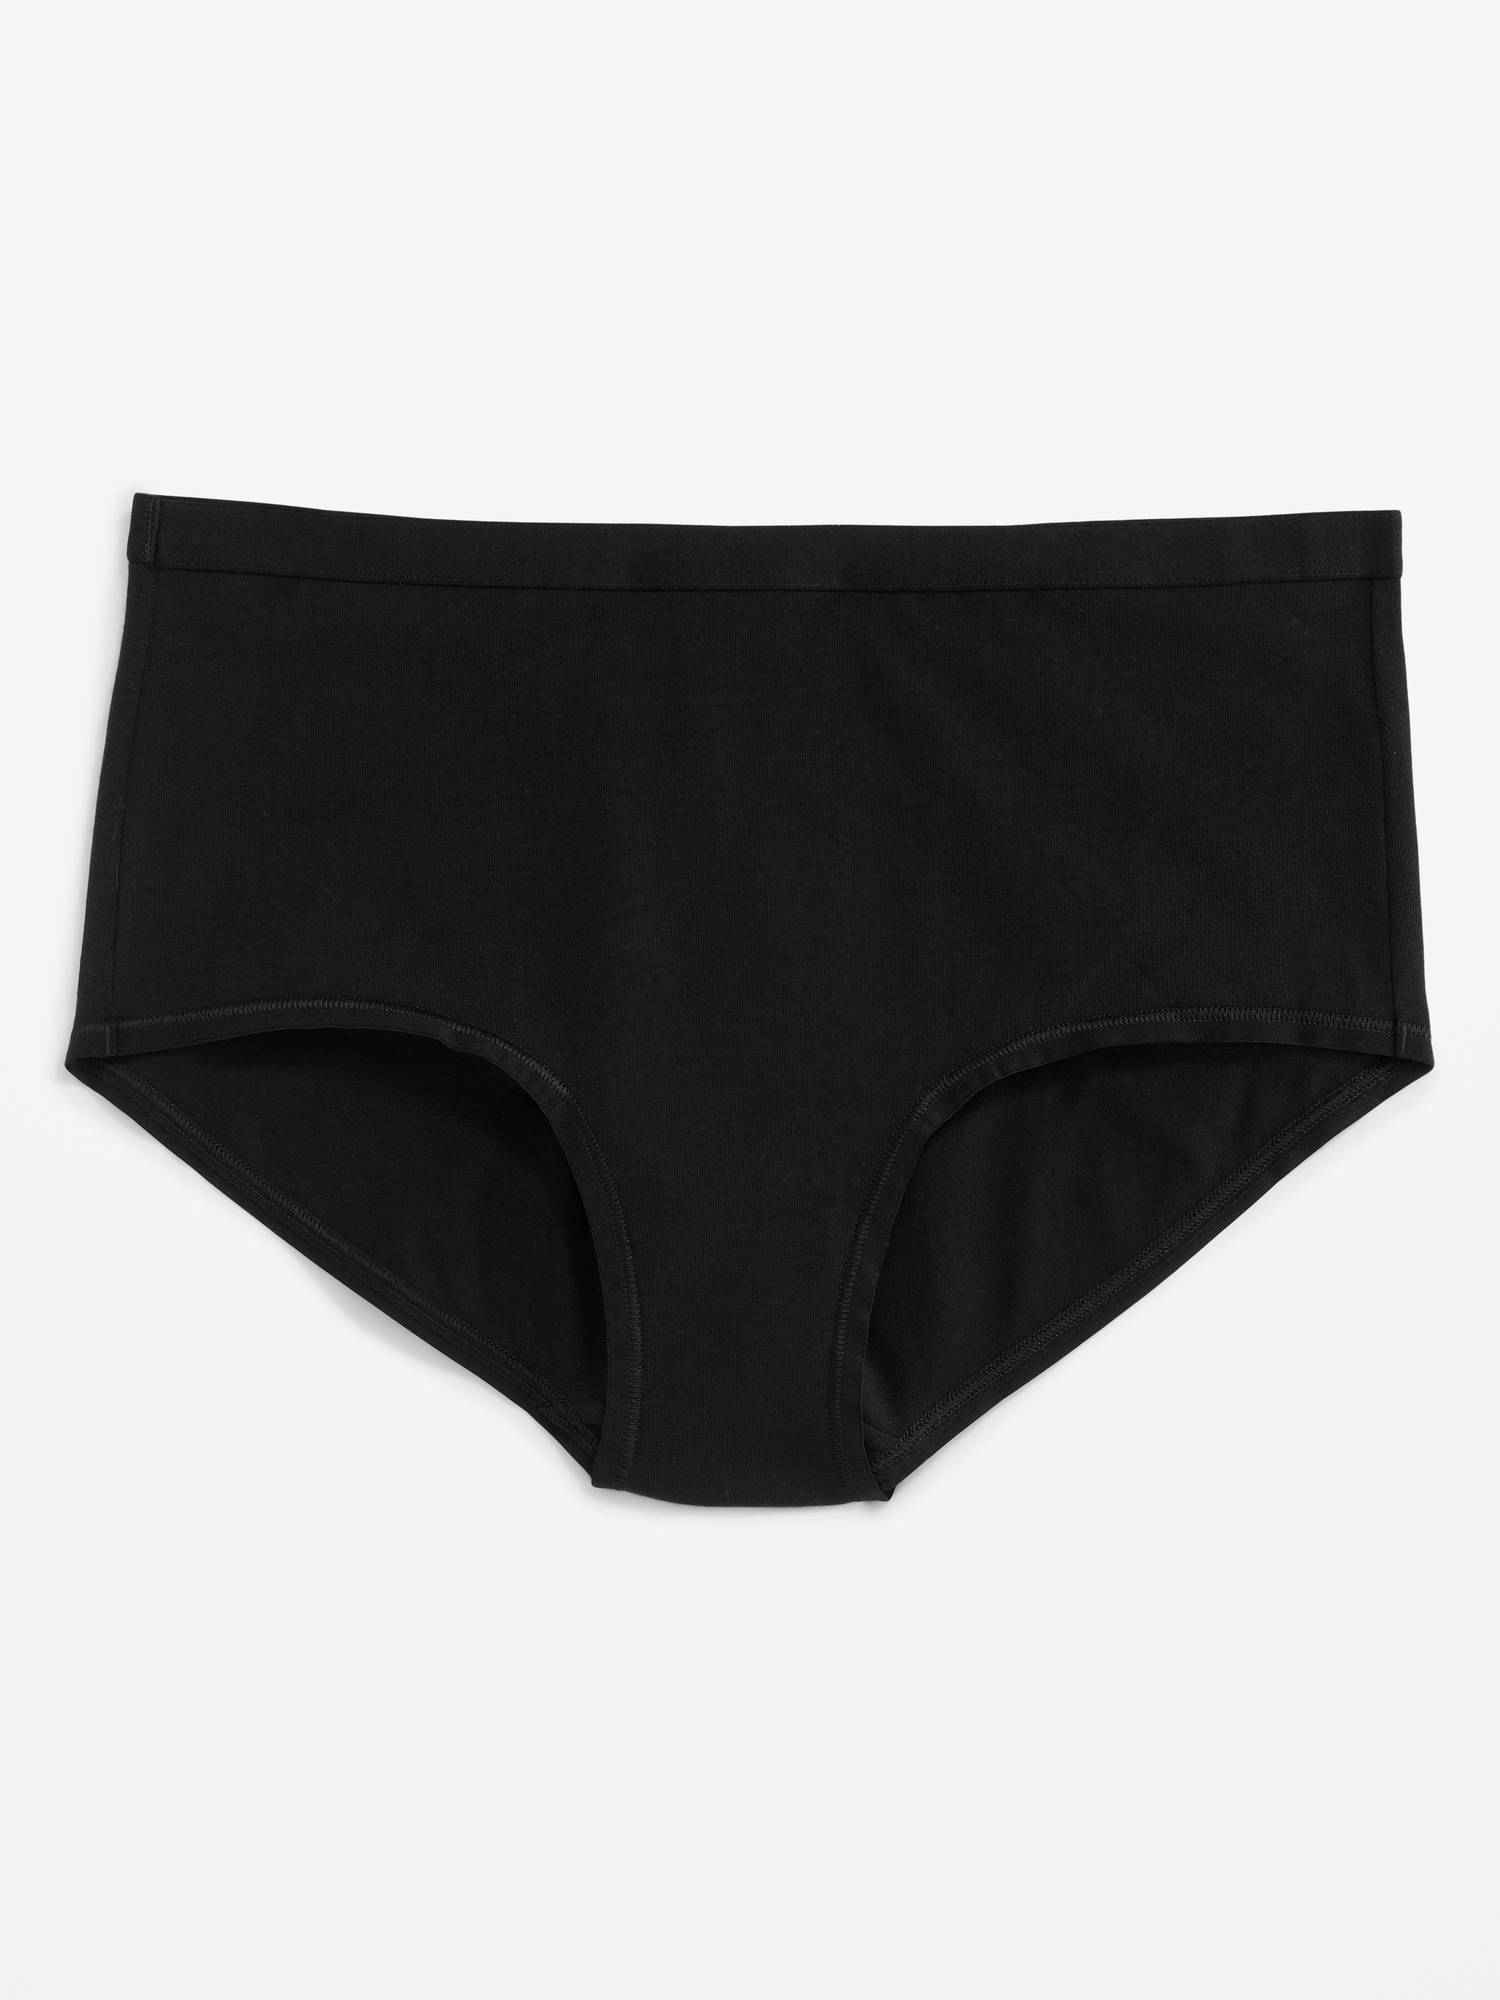 NIKASH ENTERPRISE Lnrueg Bikini Nylon Cool Elastic Thin Lightweight Classic  Underpant Panties Soft Women Underwear Solid